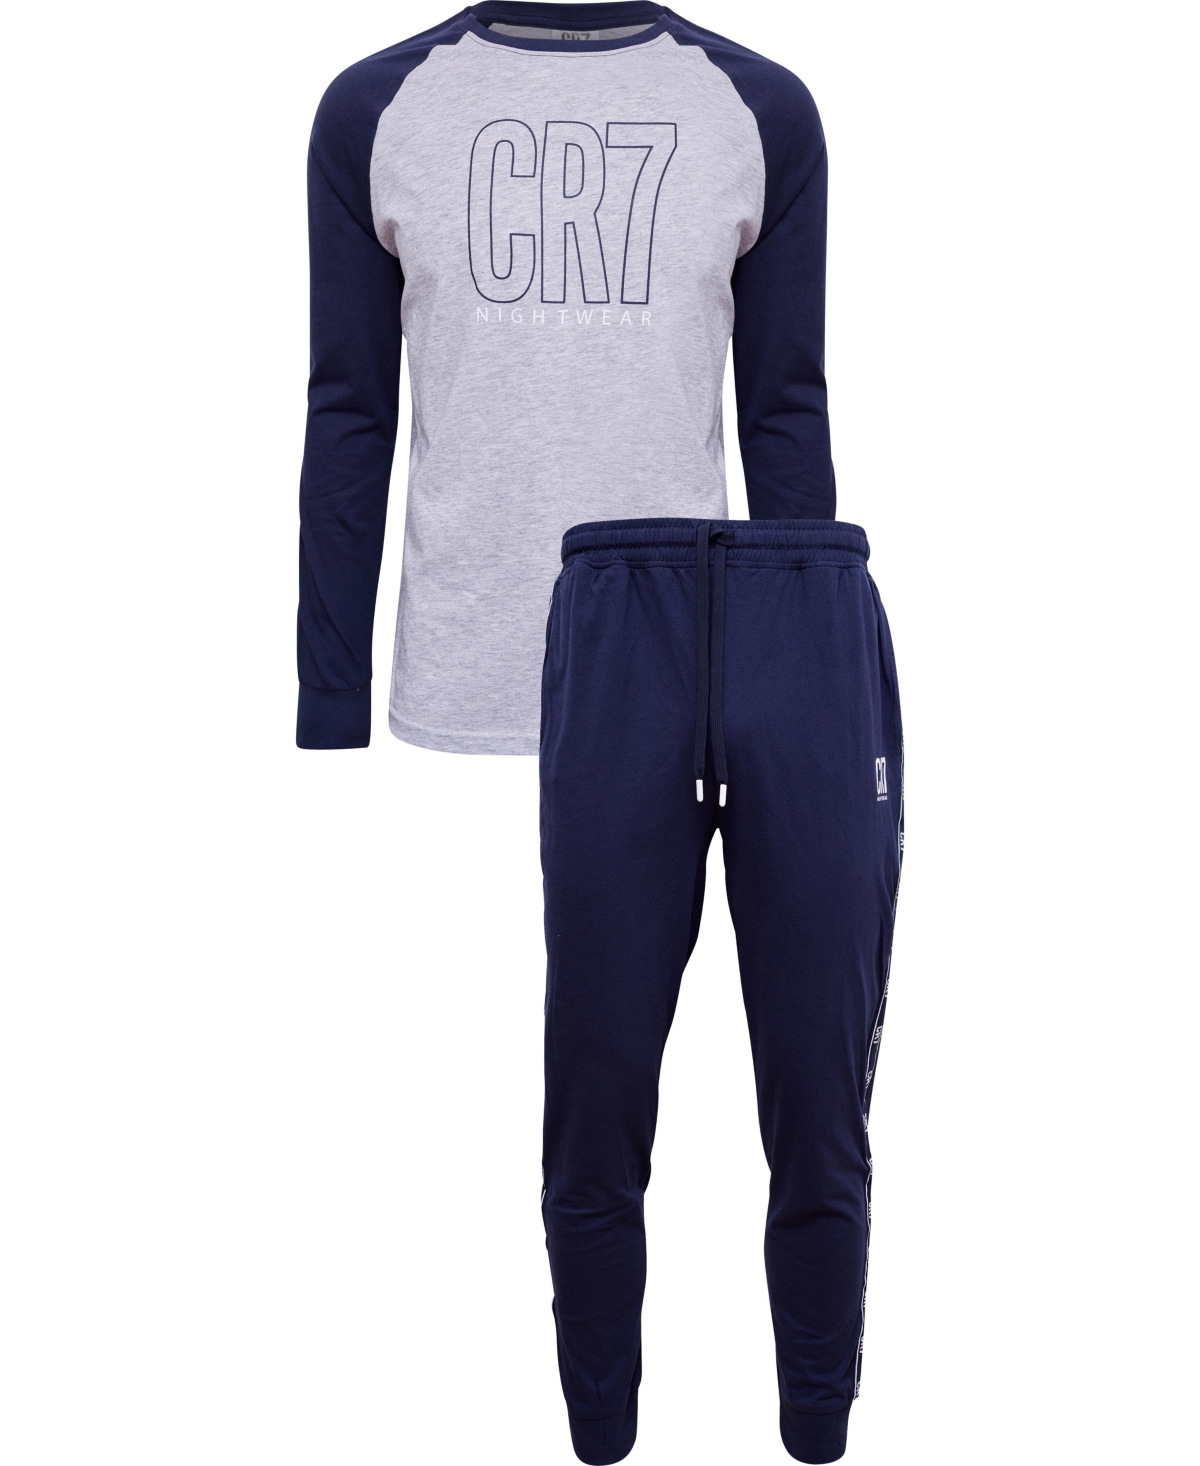 CR7 Men's Loungewear T-shirt and Pants, 2-Piece Set